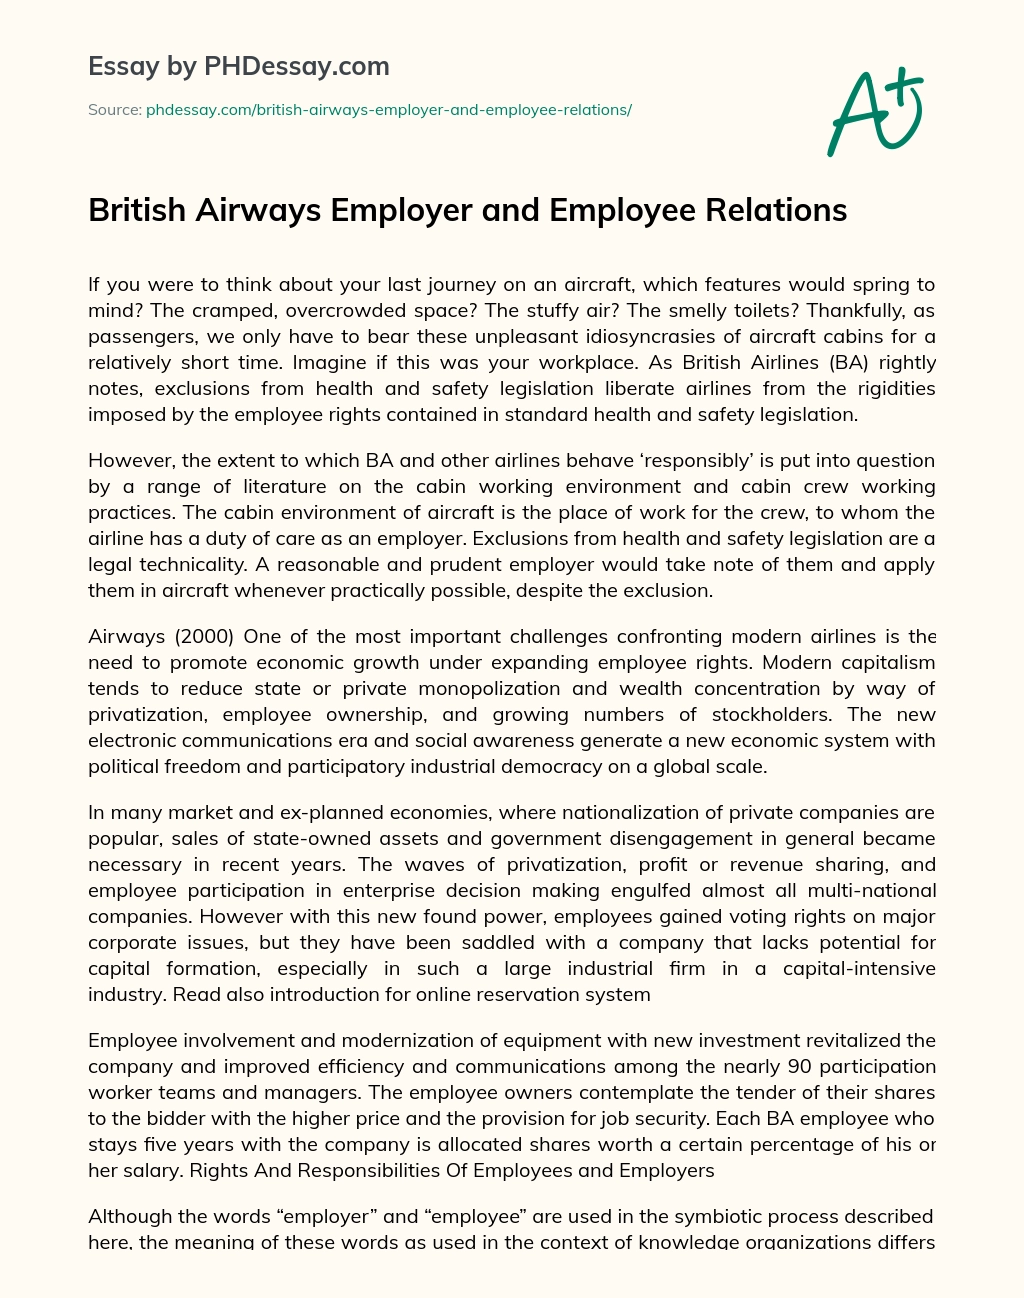 British Airways Employer and Employee Relations essay